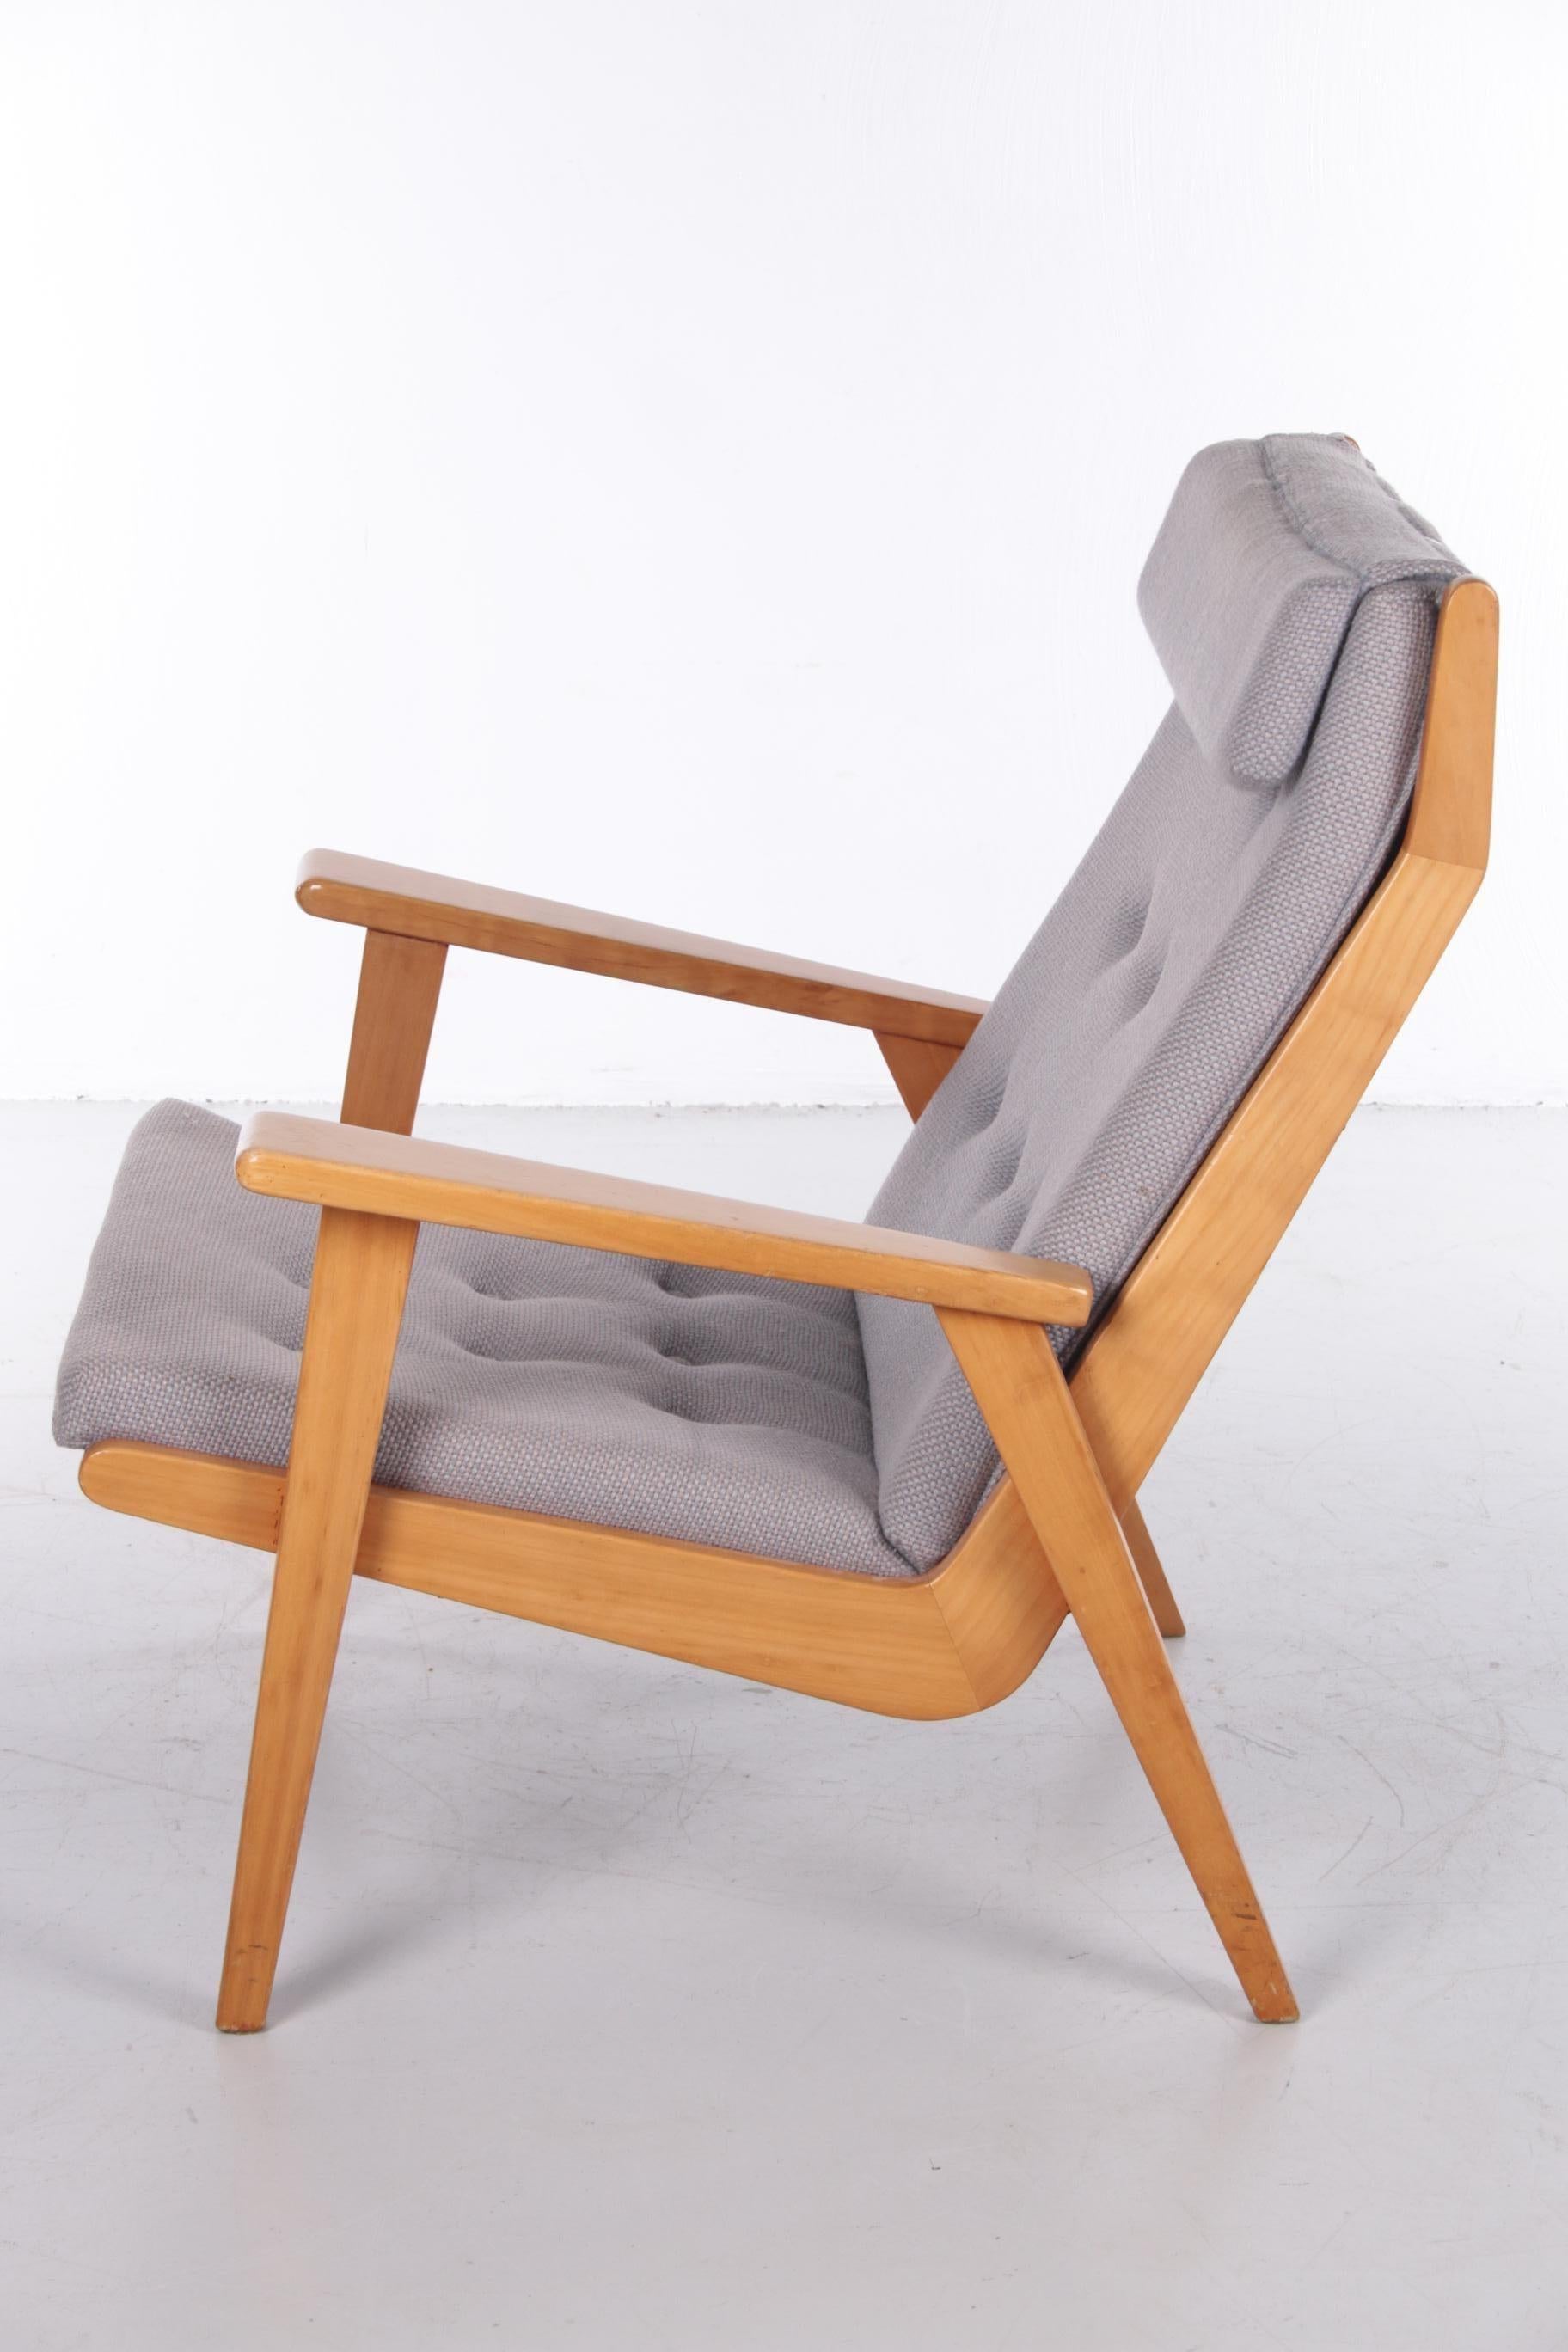 Birch Vintage Rob Parry for Gelderland Lounge Chair Model 1611, the Netherlands, 1952